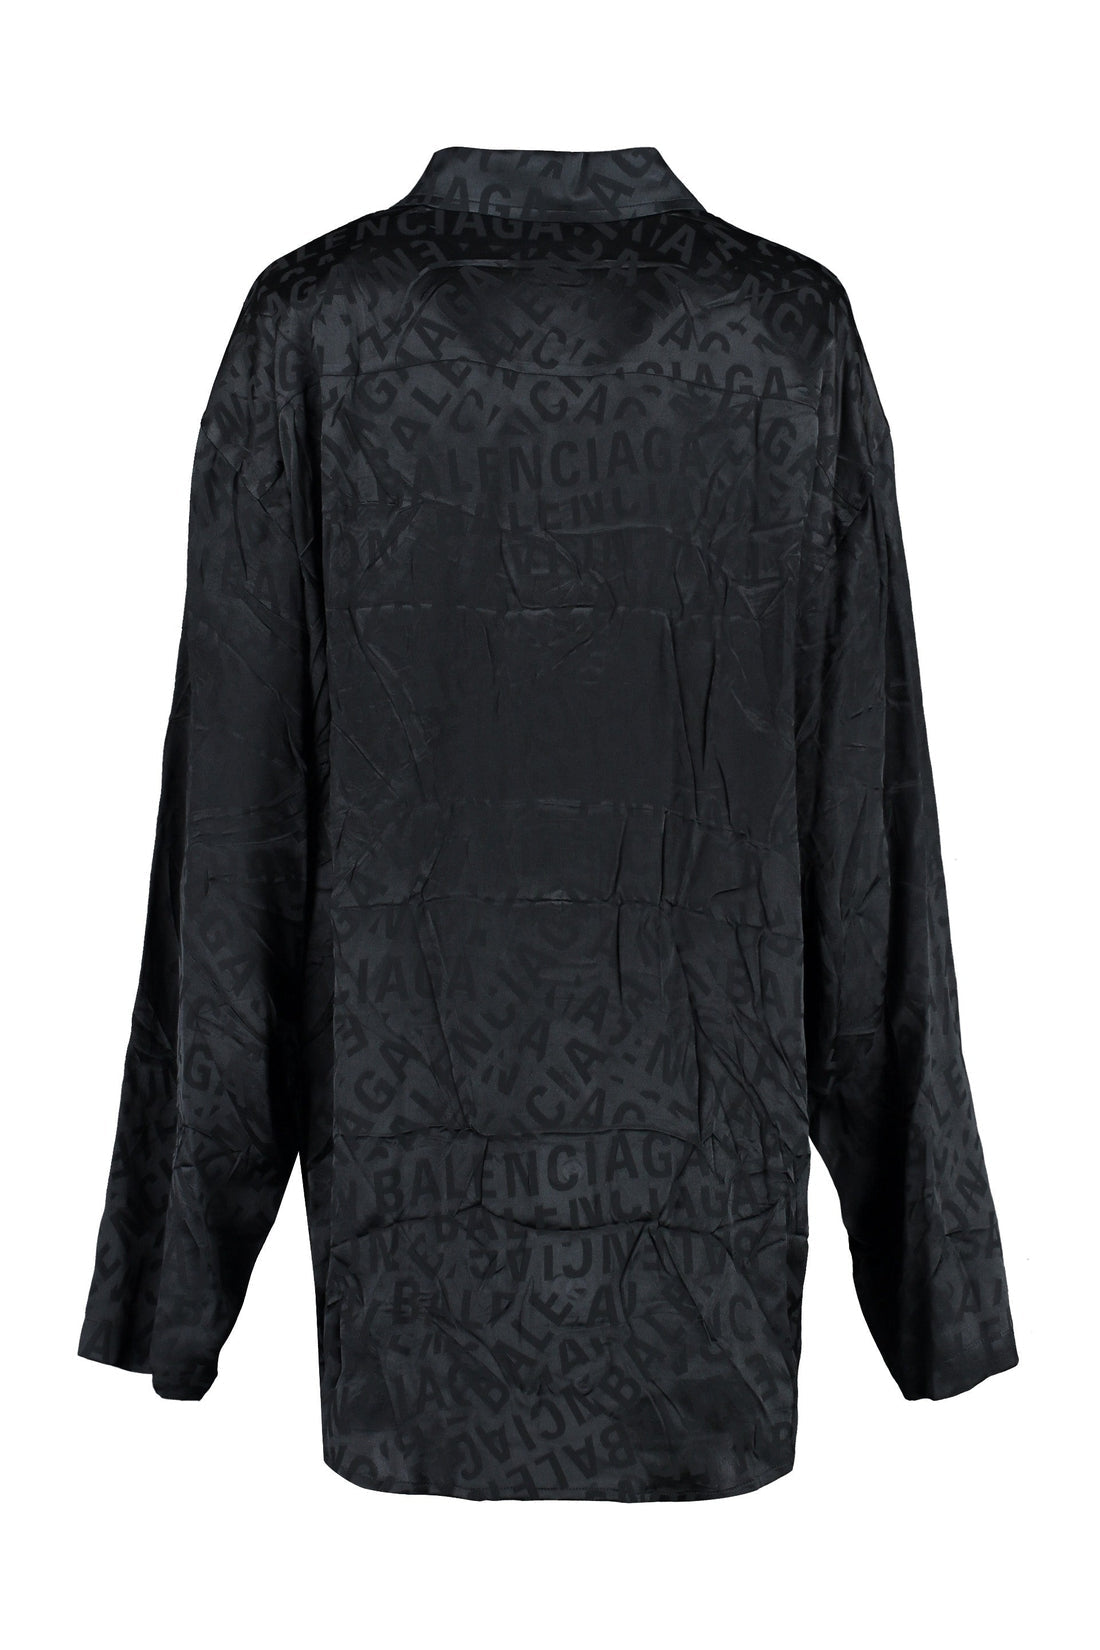 Balenciaga-OUTLET-SALE-Silk shirt-ARCHIVIST